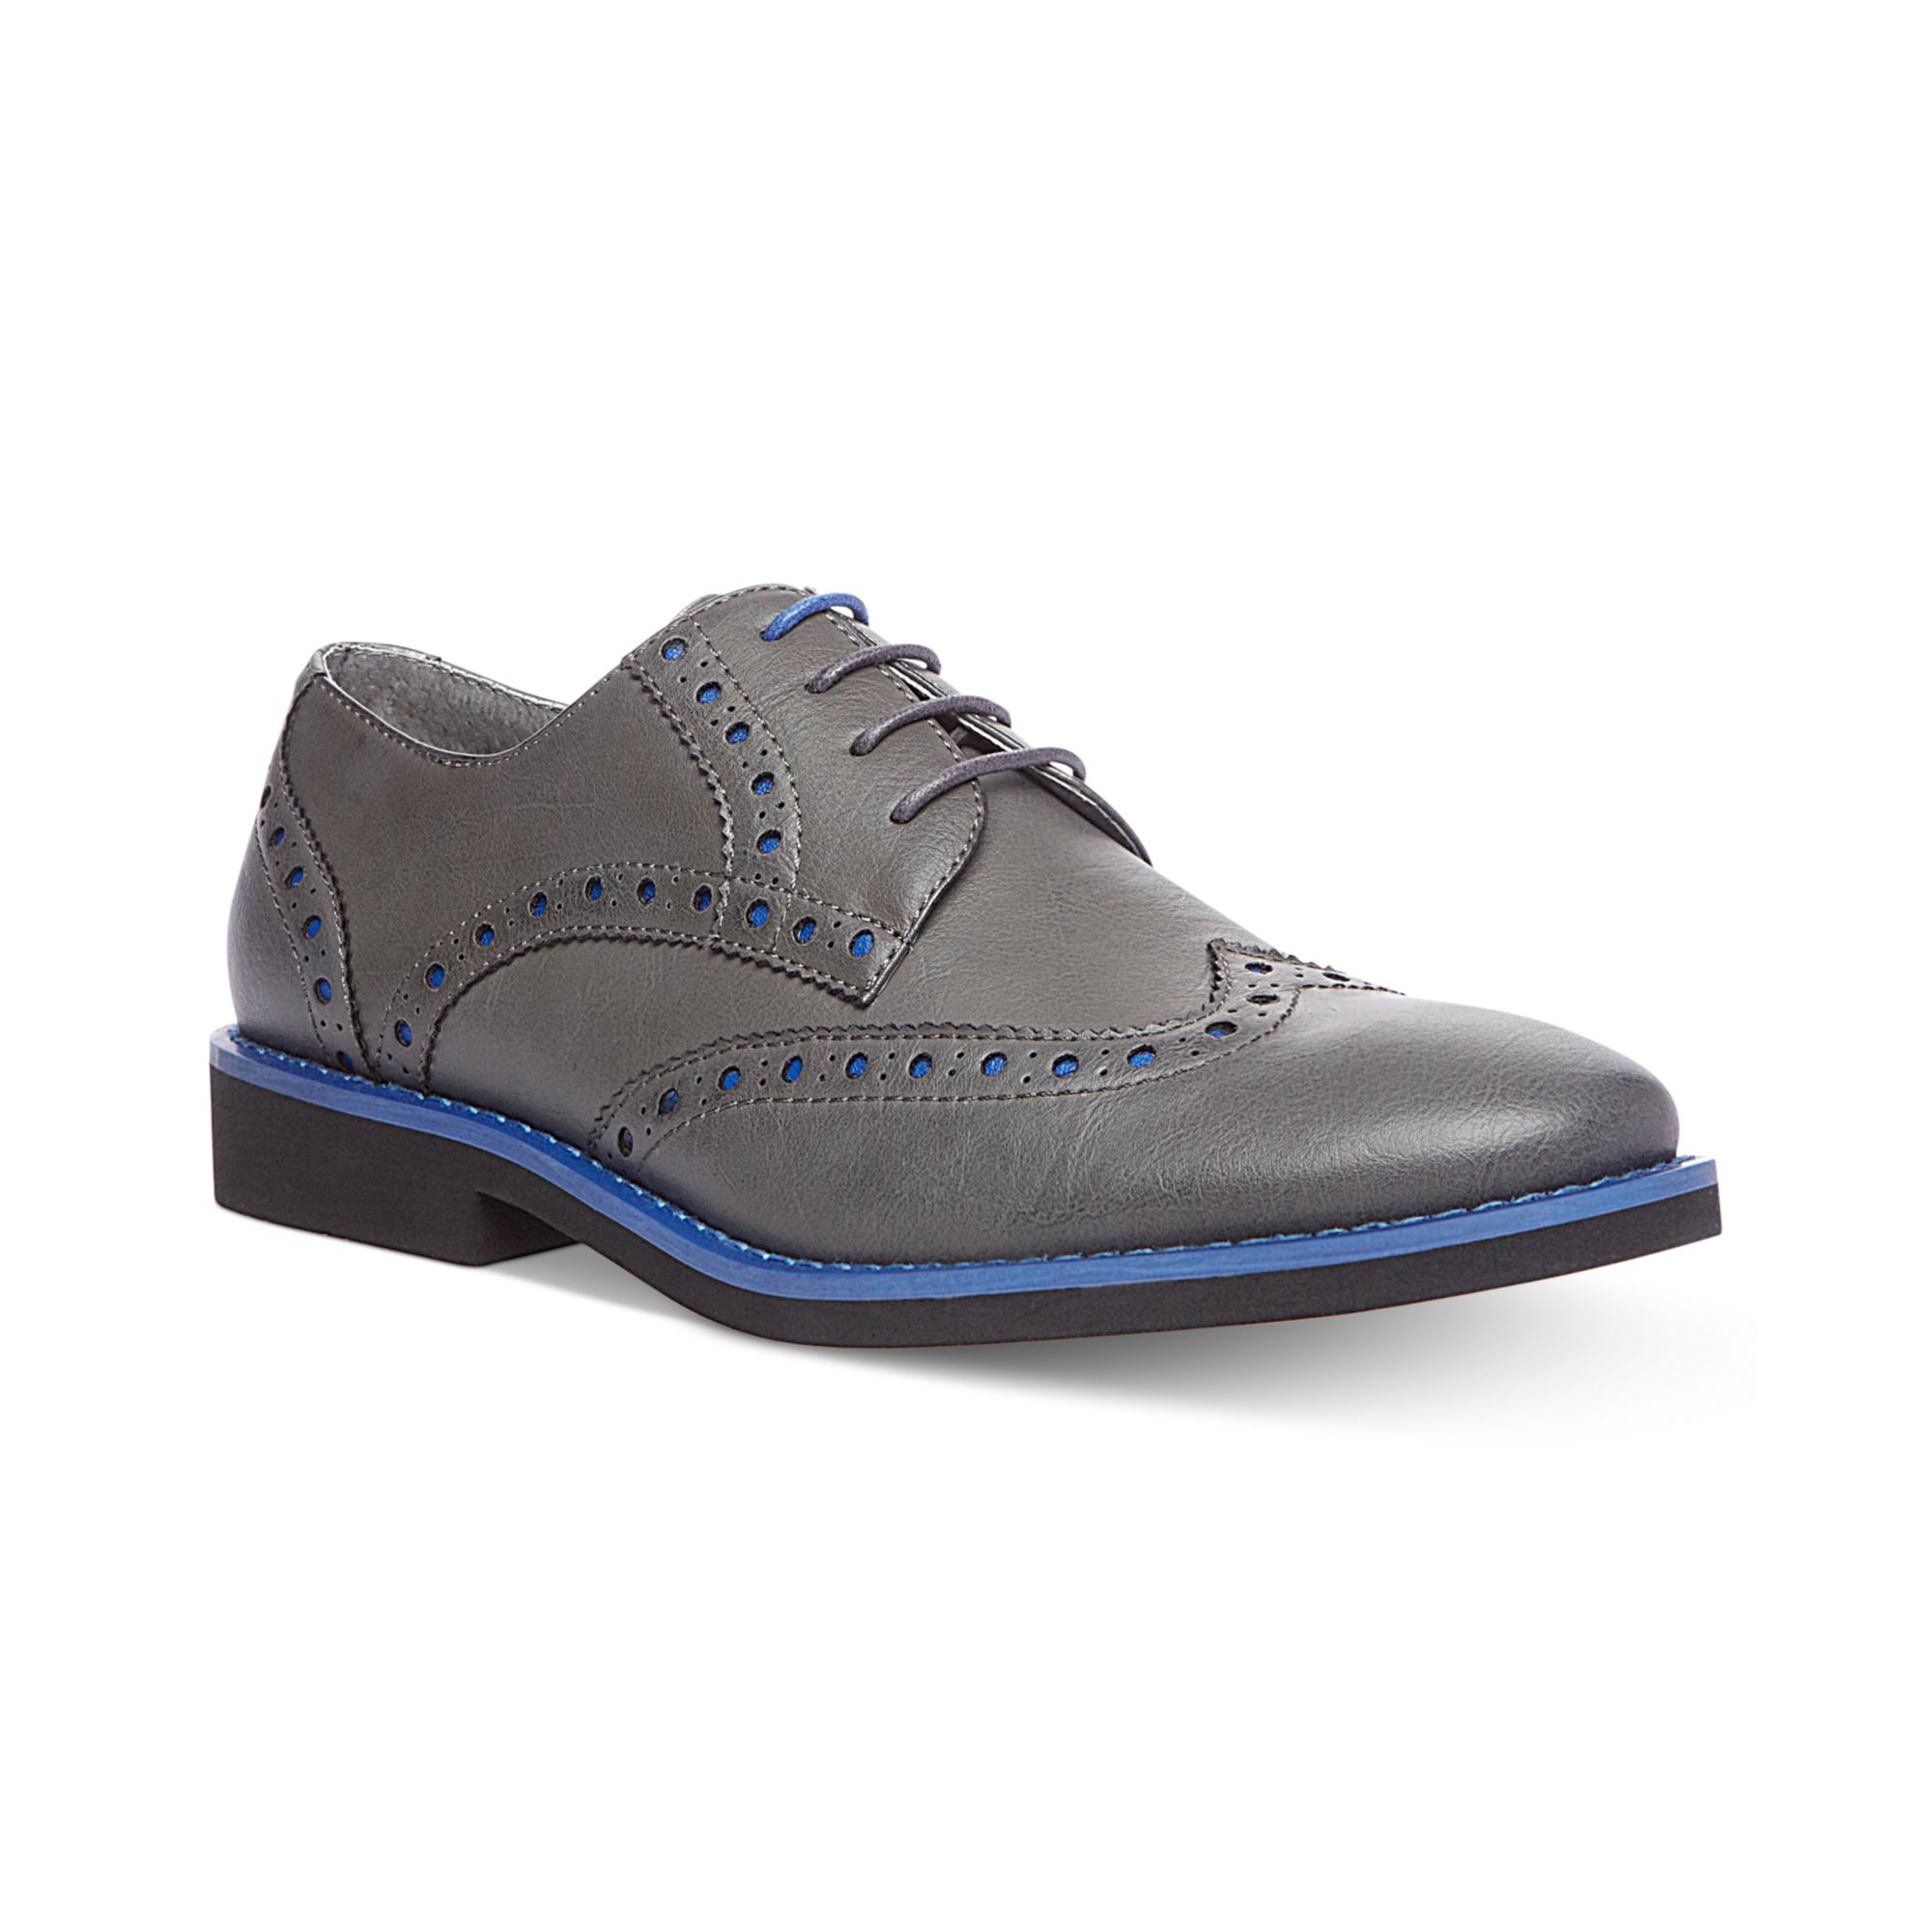  Steve  madden  Lokust Wingtip Shoes  in Gray for Men Grey 